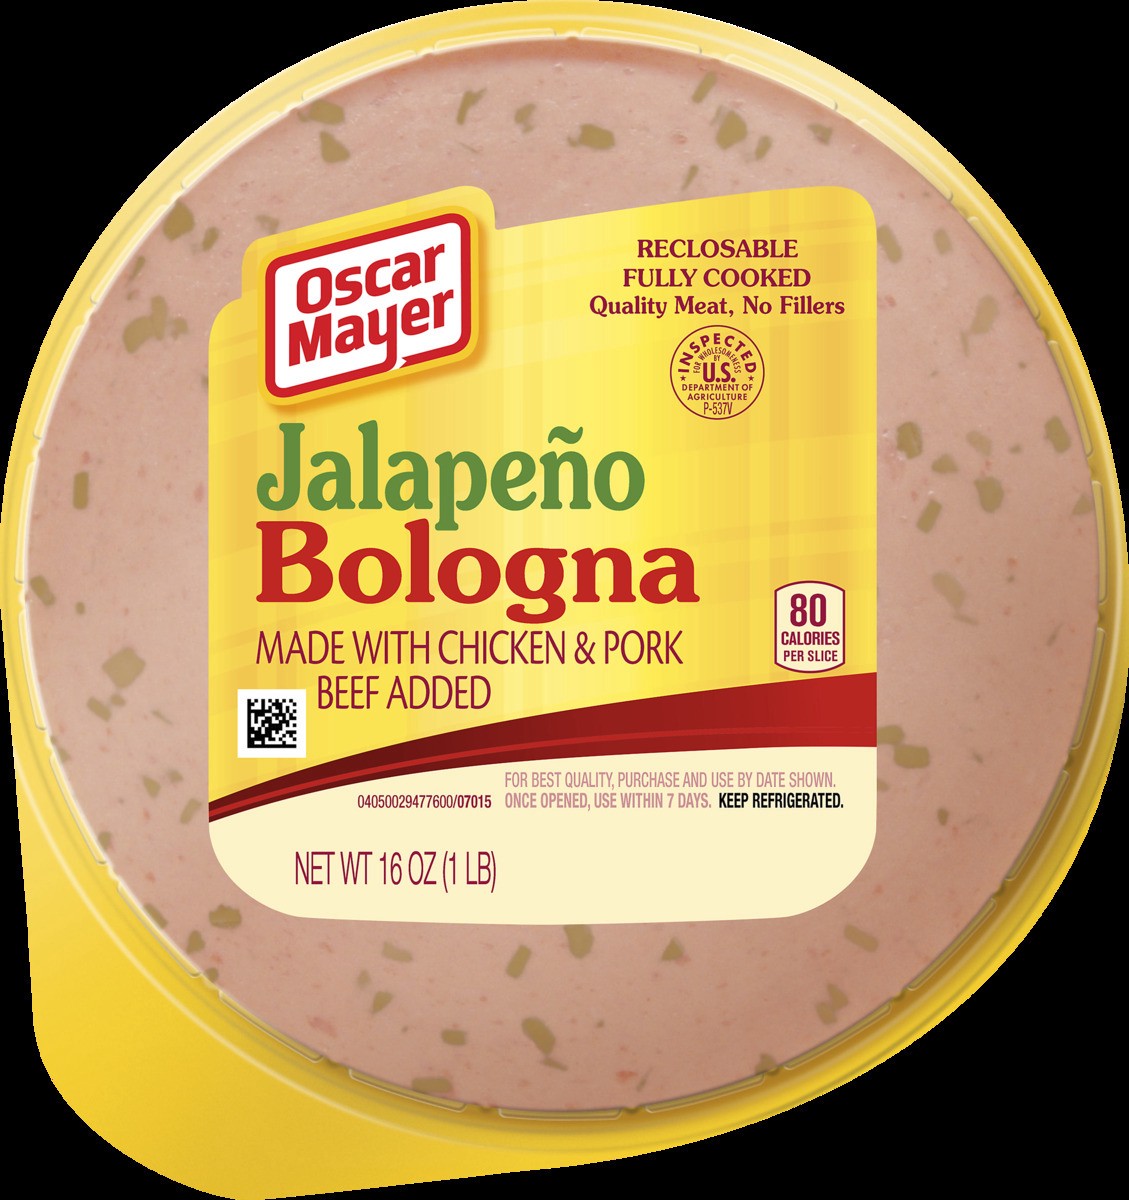 slide 2 of 2, Oscar Mayer Jalapeno Bologna made with Chicken & Pork, Beef Added Sliced Lunch Meat, 16 oz. Pack, 16 oz